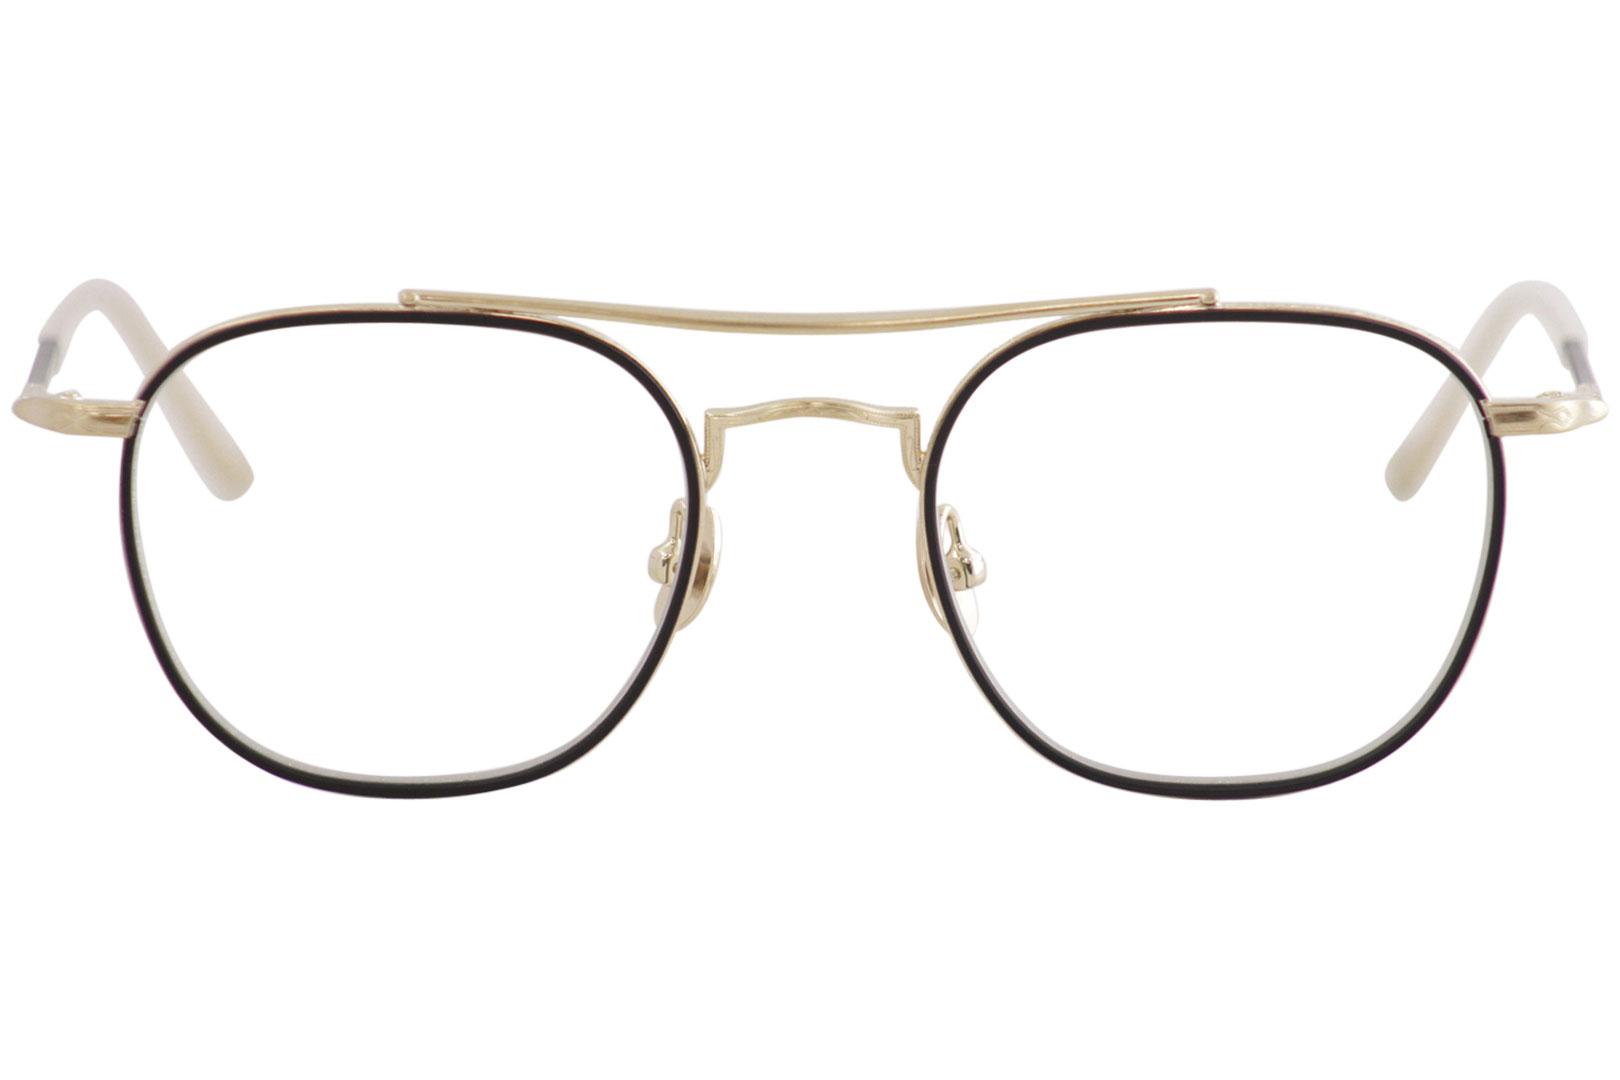 Matsuda Eyeglasses M3077 M/3077 MBK-BG Matte Black/Gold Optical Frame 49mm